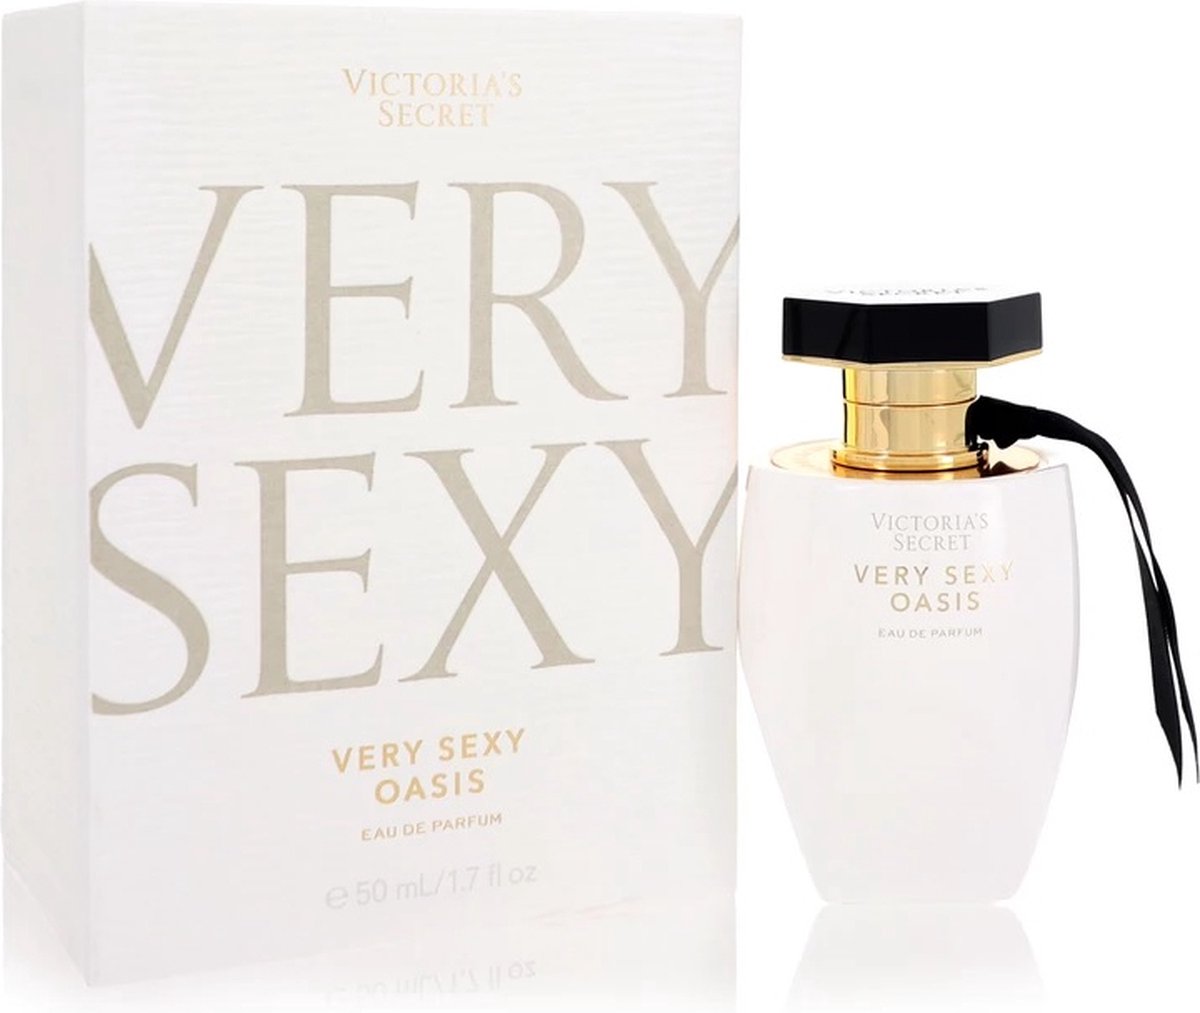 Victoria's Secret - Very Sexy Oasis - Eau de parfum spray - 50 ml